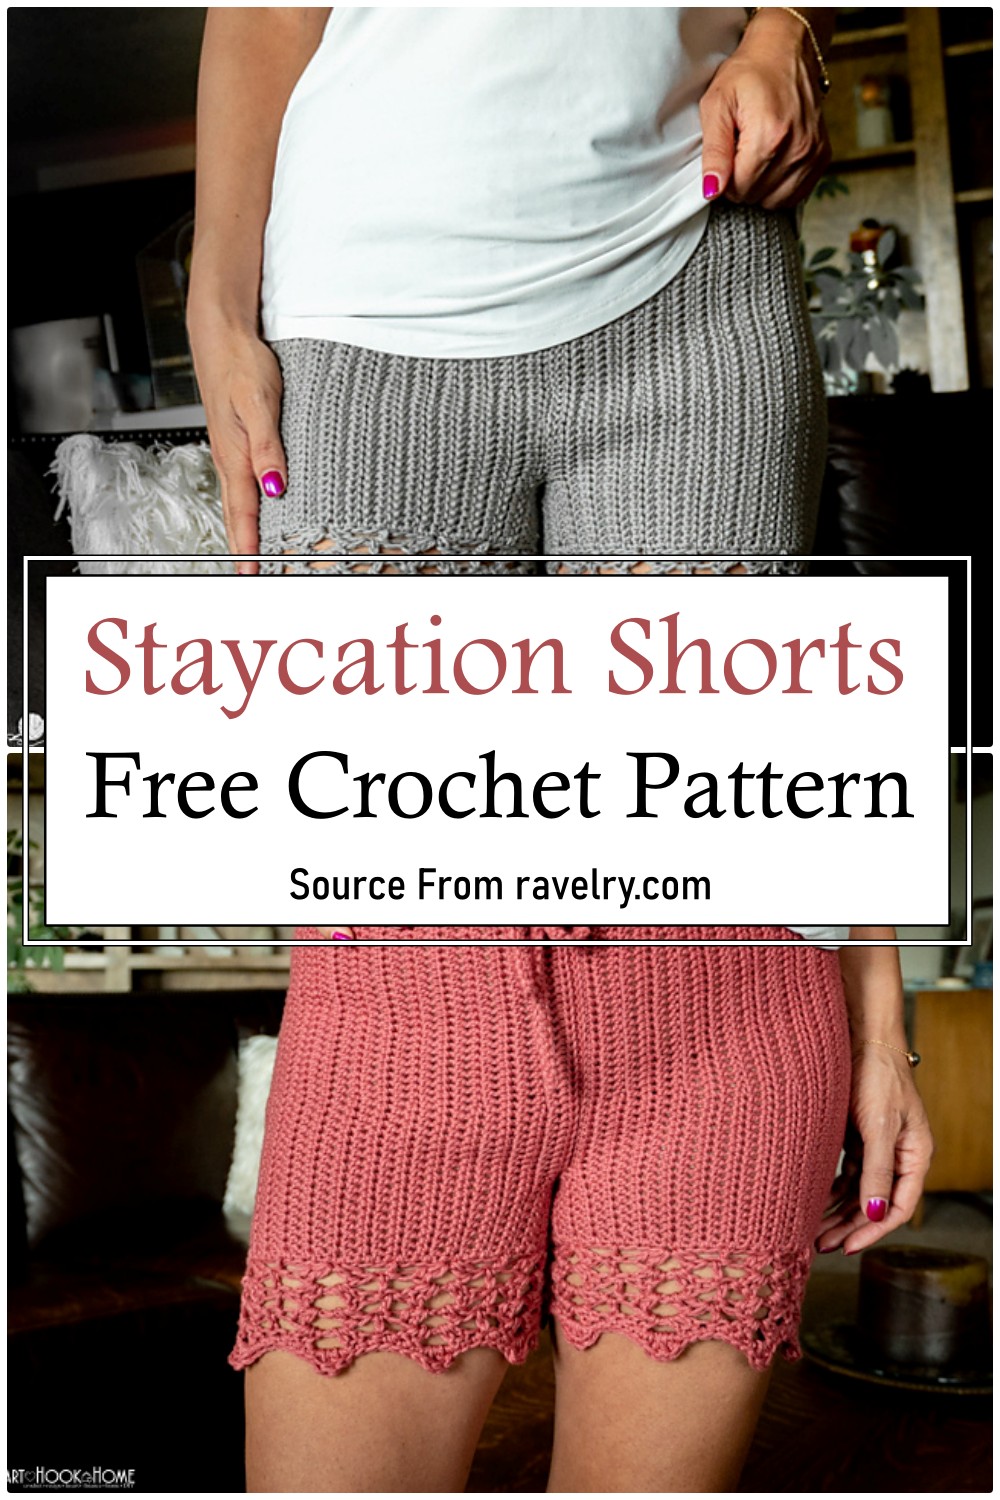  Staycation Shorts